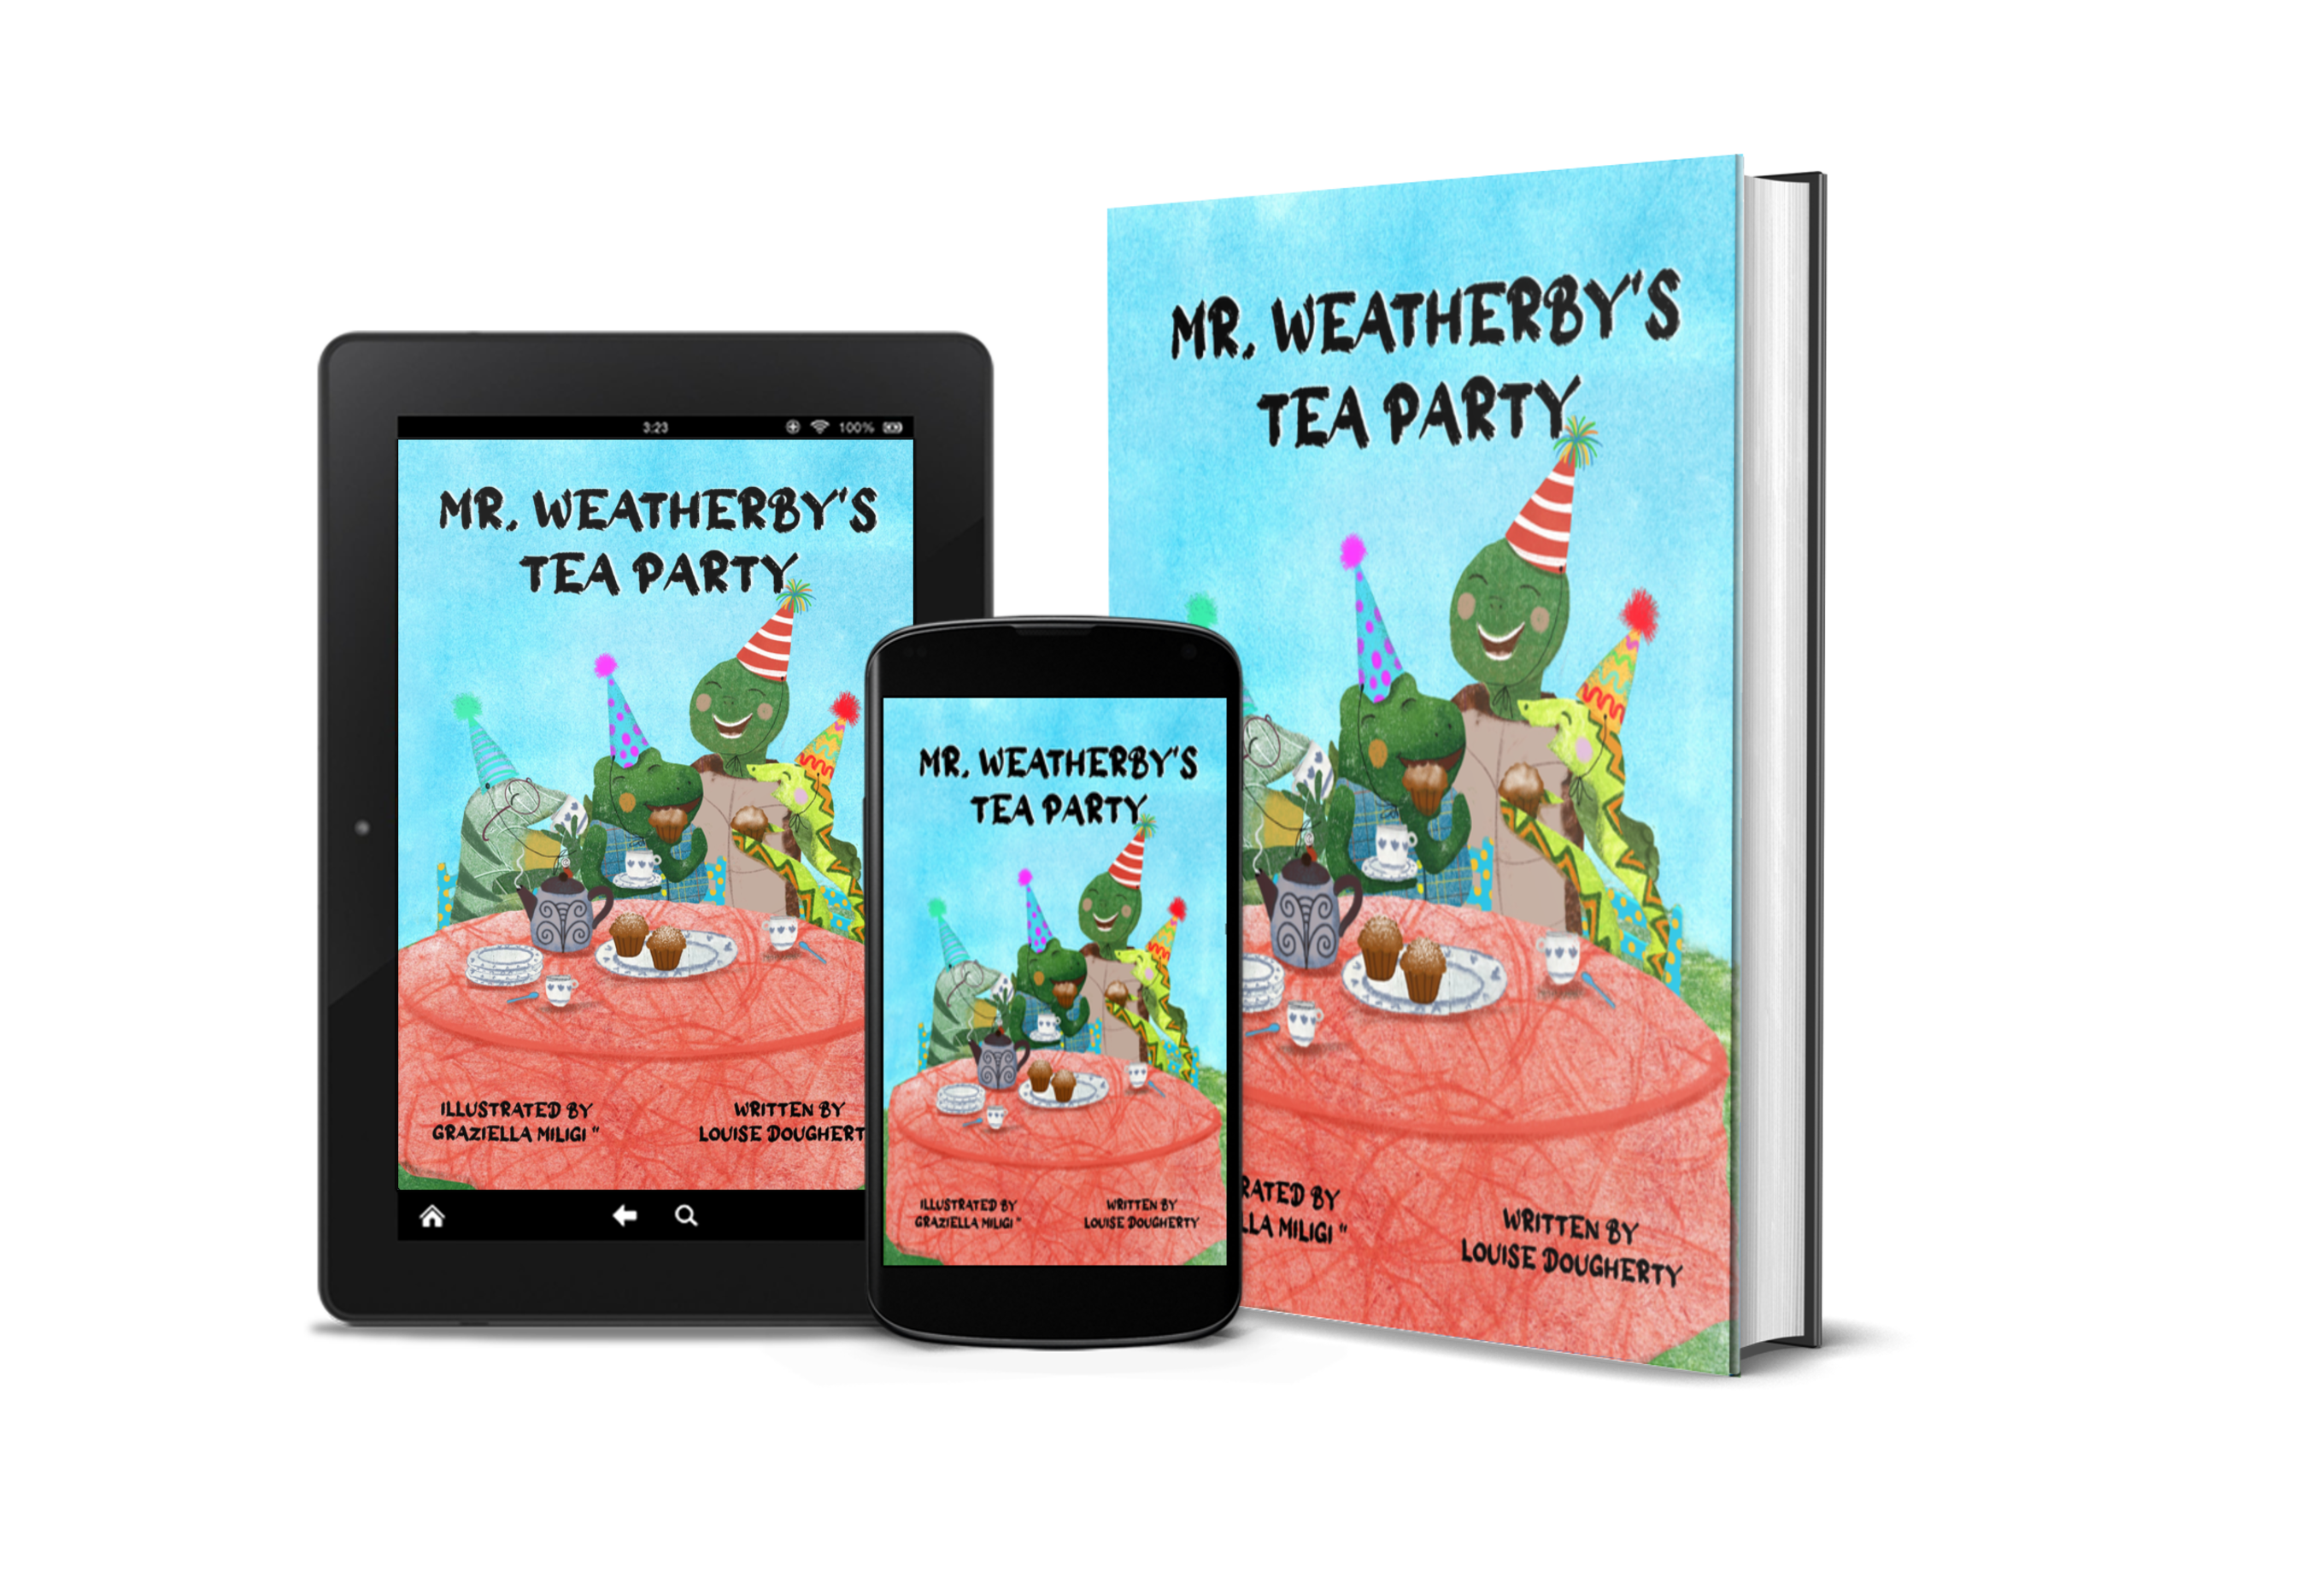 MR, WEATHERBY'S
Lo TEA PARTY

MR. WEATHERBY'S
TEA PARTY

MR. WEATHERBY'S
TEA PARTY

ILLUSTRATED BY WRITTEN BY
GRAZIELLA MILIGI * LOUISE DOUGHER